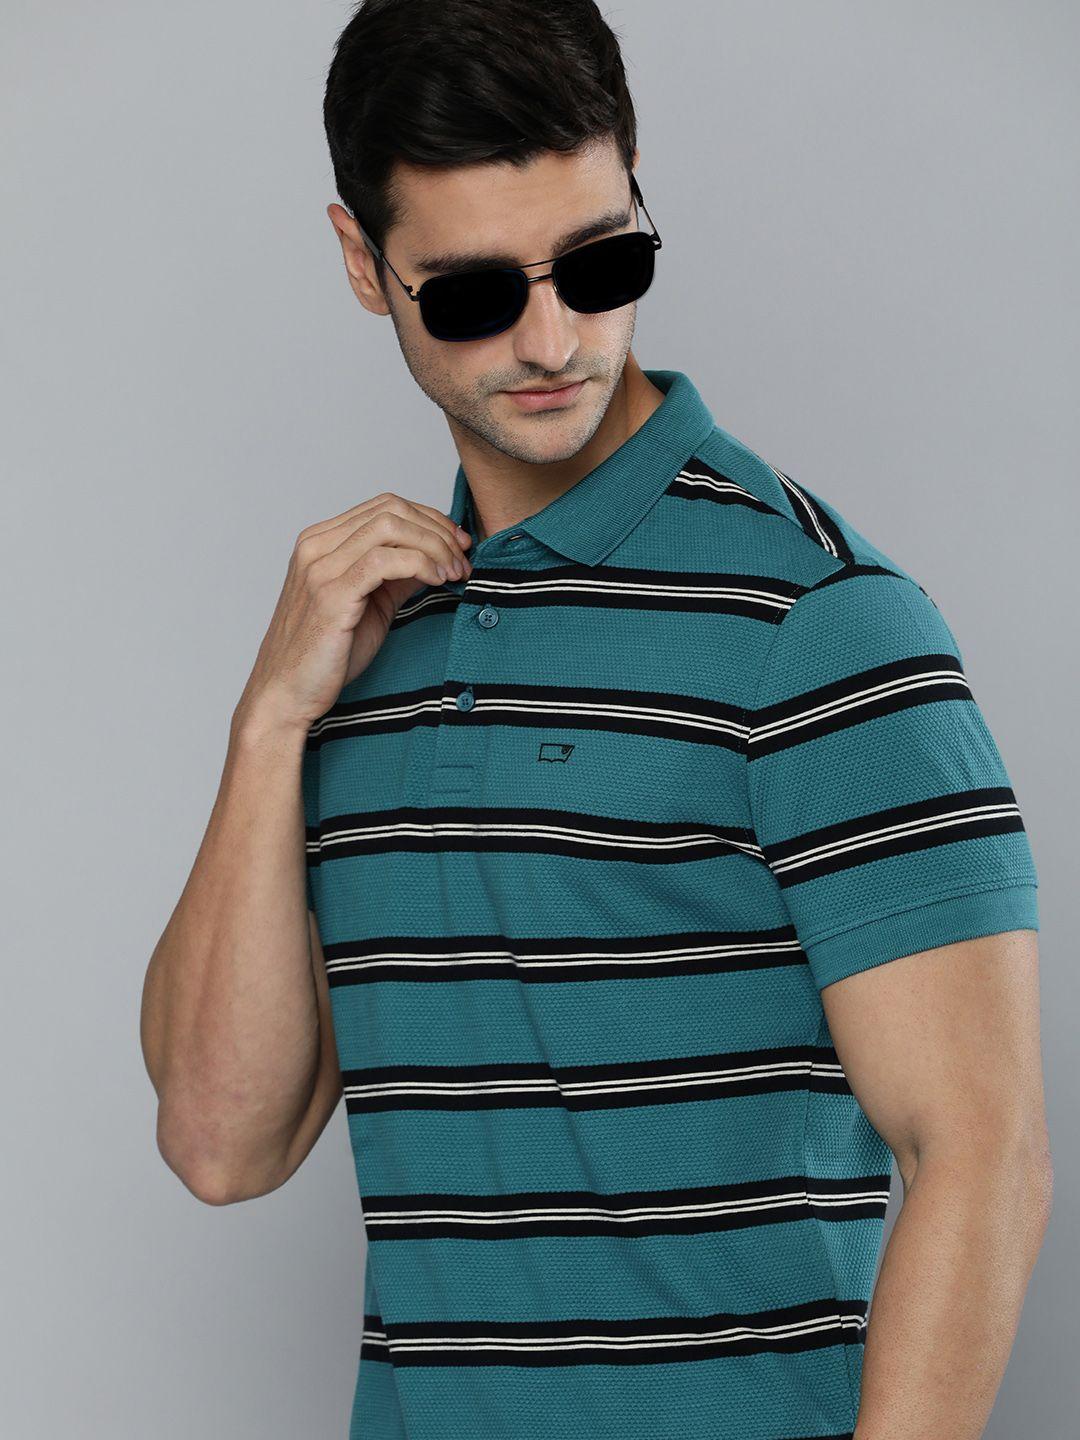 levis men teal blue & black striped polo collar pure cotton casual t-shirt